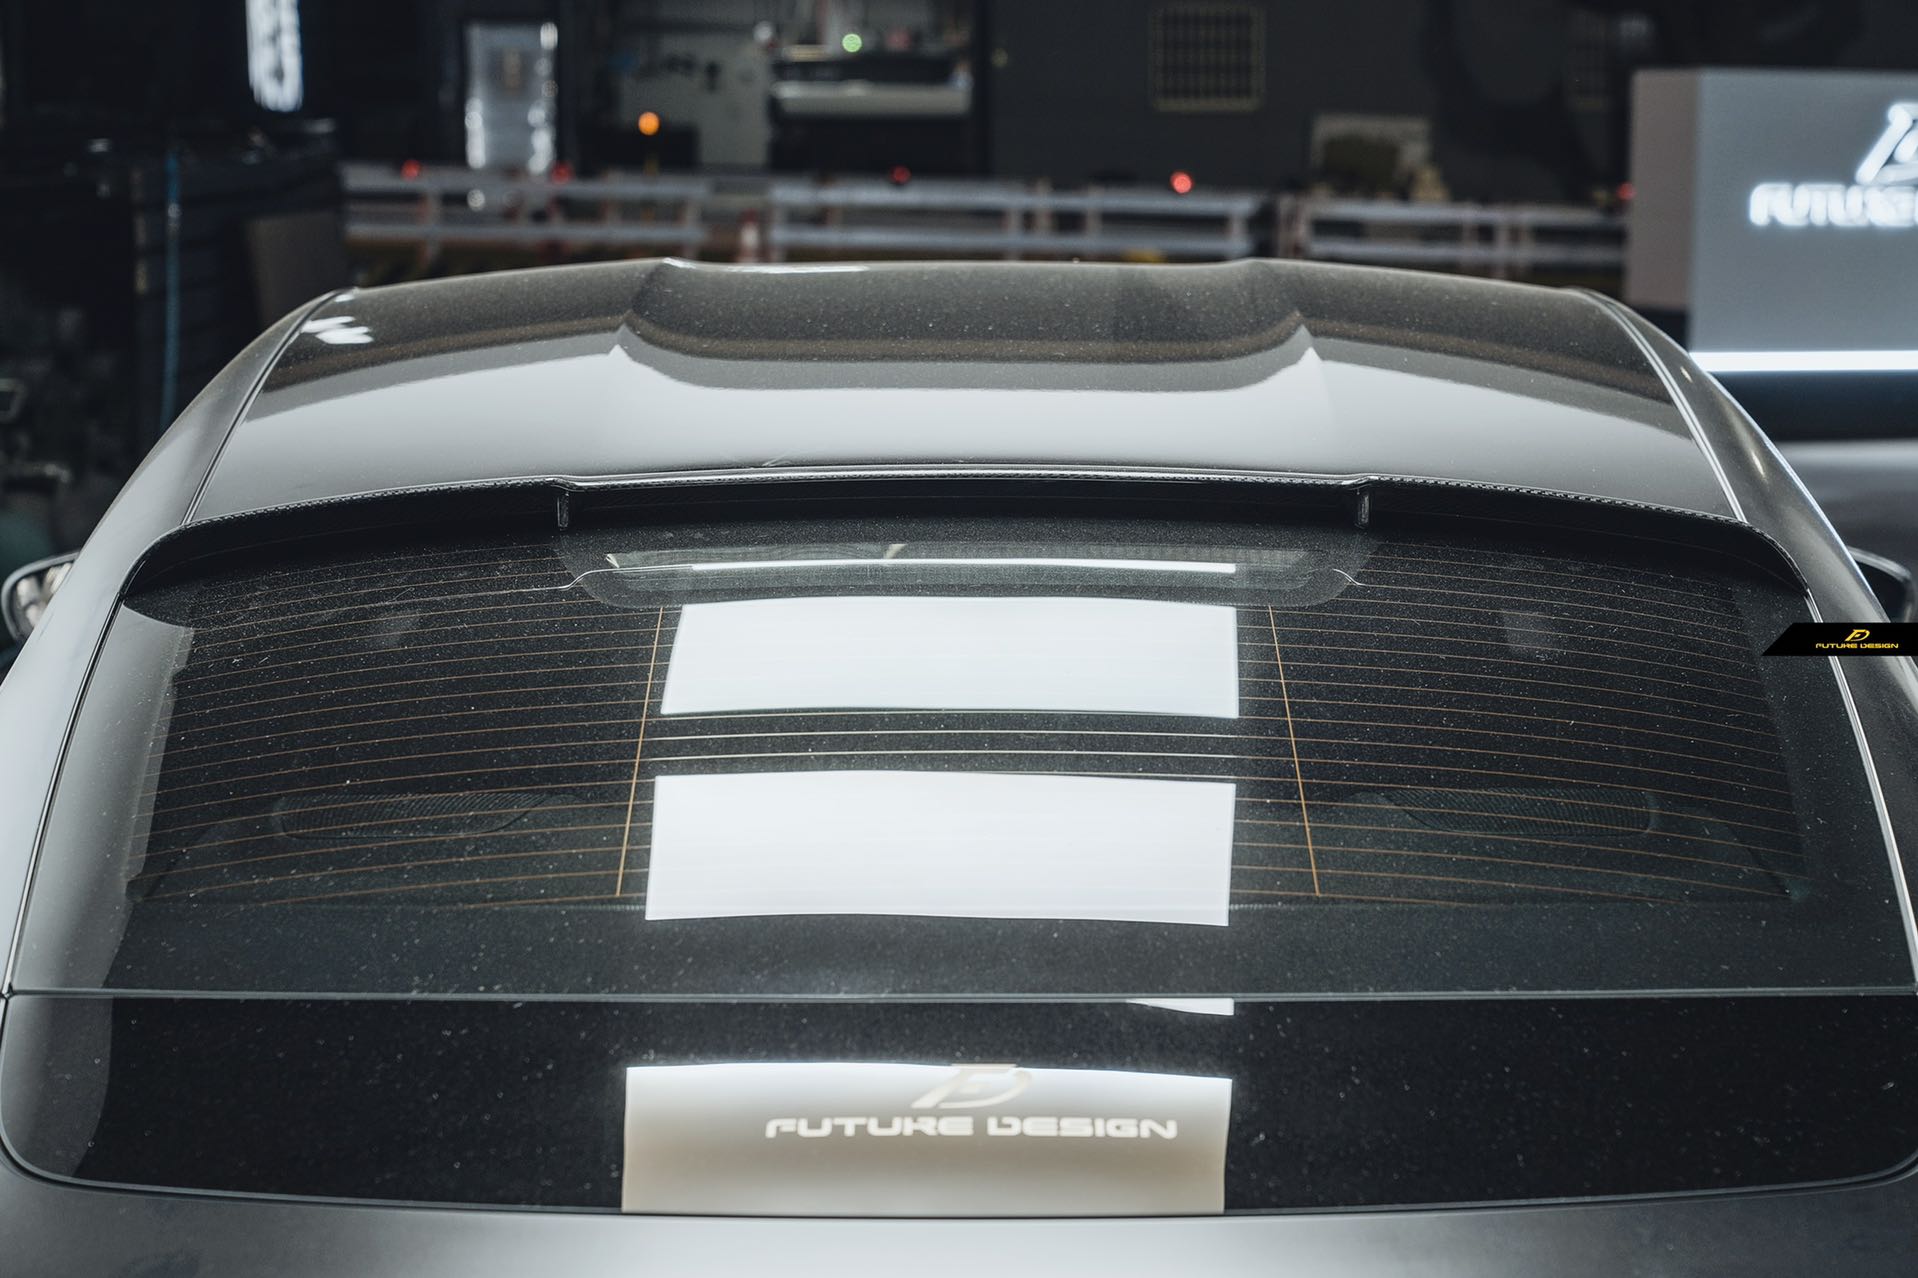 Future Design FD Carbon Fiber ROOF SPOILER for Porsche Taycan Base & 4S & Turbo & Turbo S